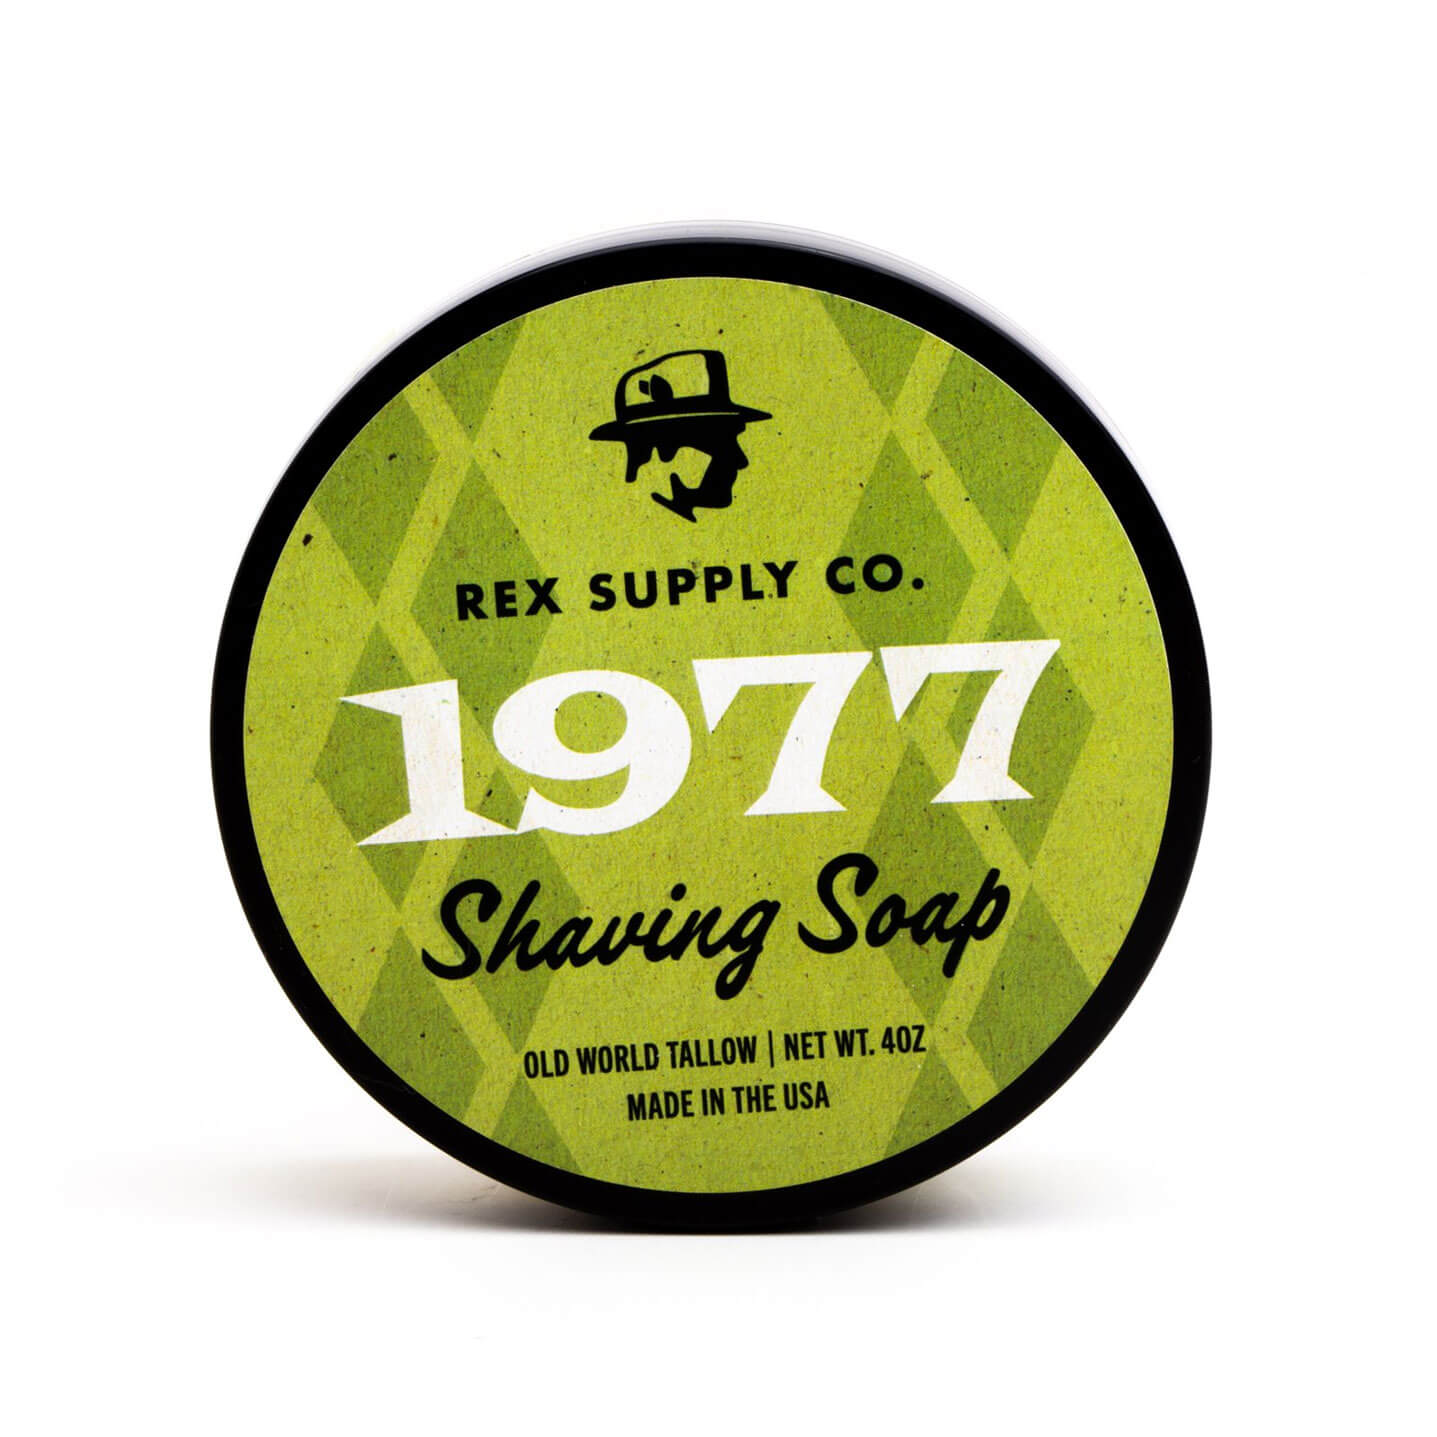 Rex 1977 Shaving Soap